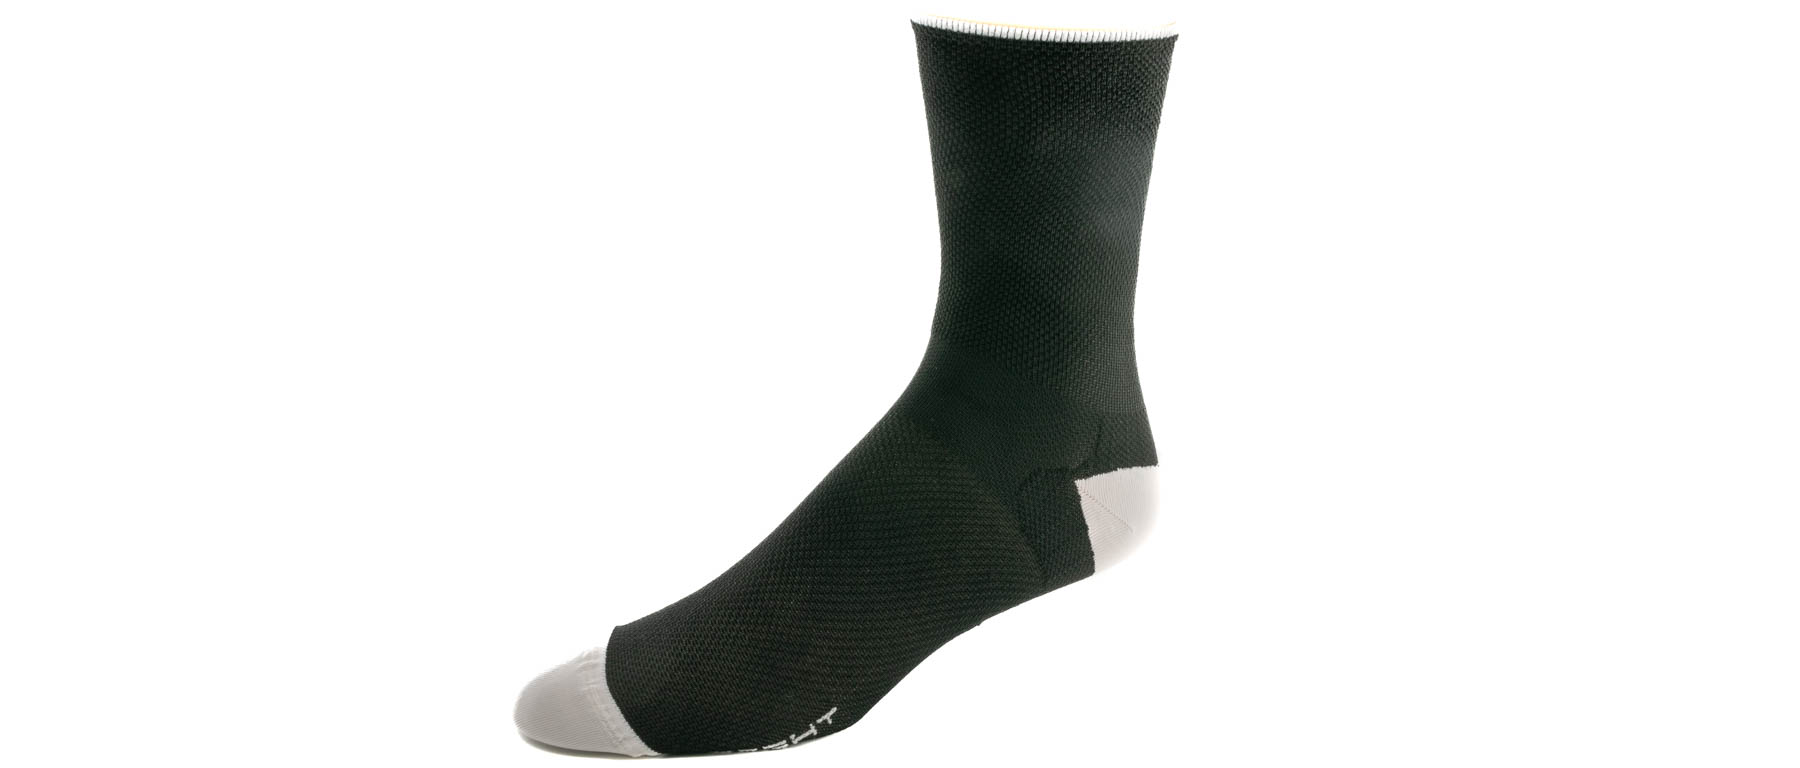 Assos RS Superleger S11 Socks